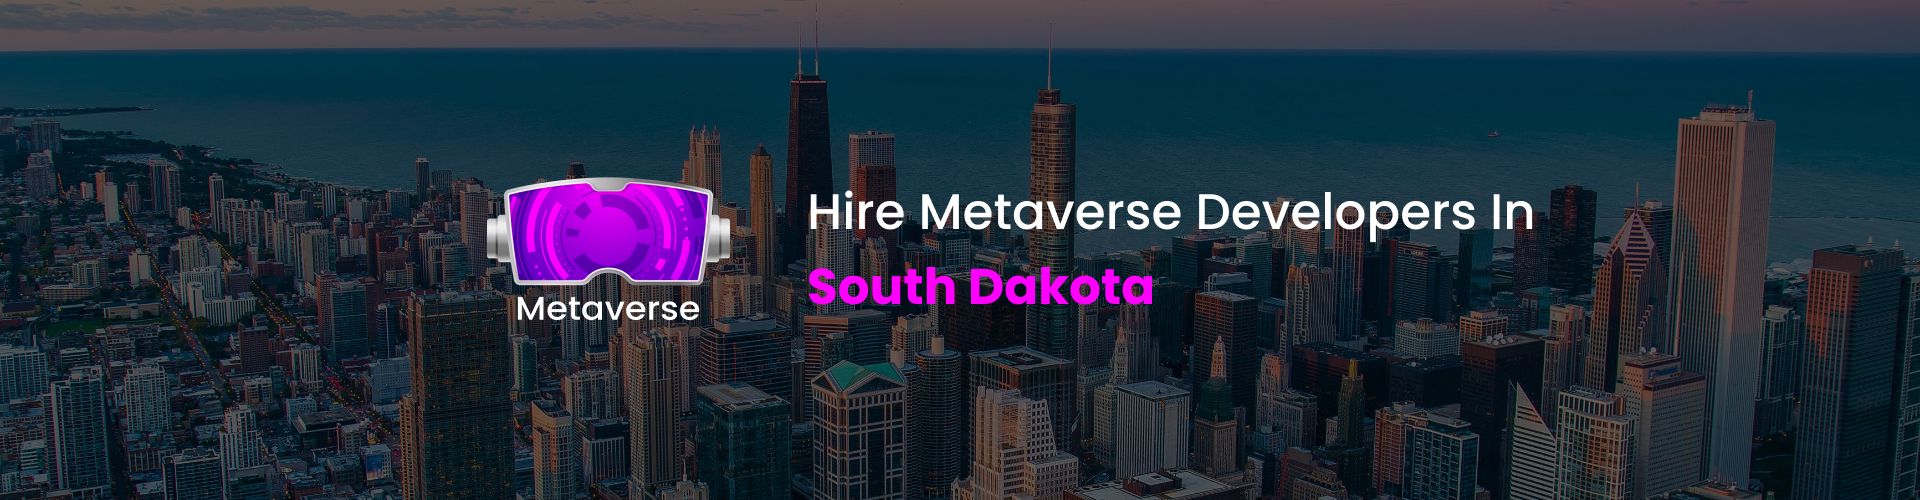 hire metaverse developers in south dakota